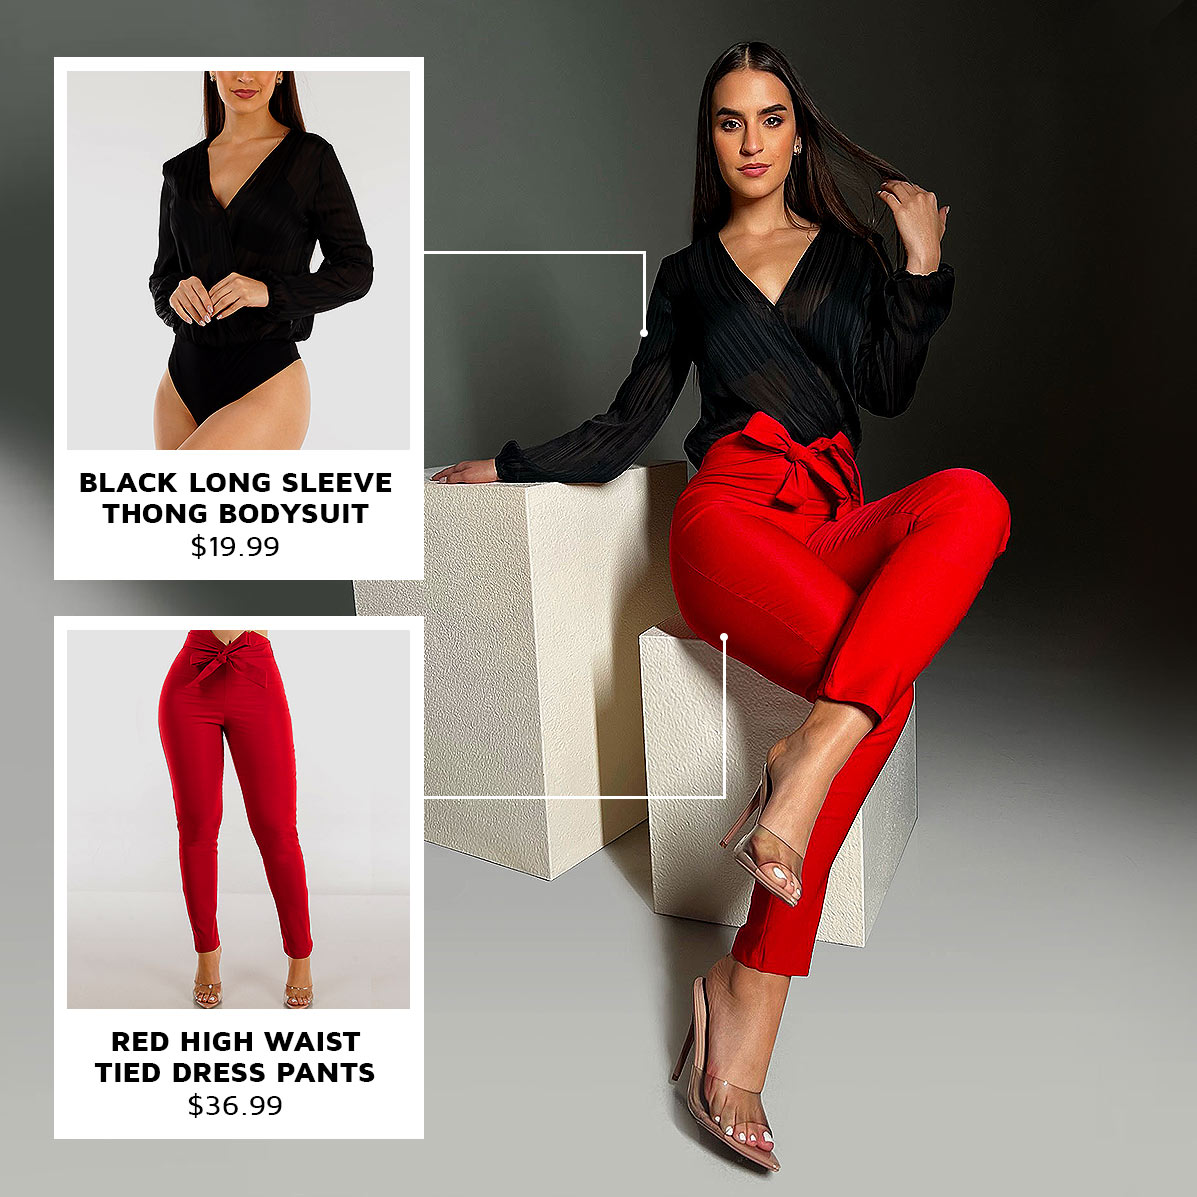 Moda Xpress Full Outfits: Black Long Sleeve Thong Bodysuit & Red High Waist Tied Dress Pants